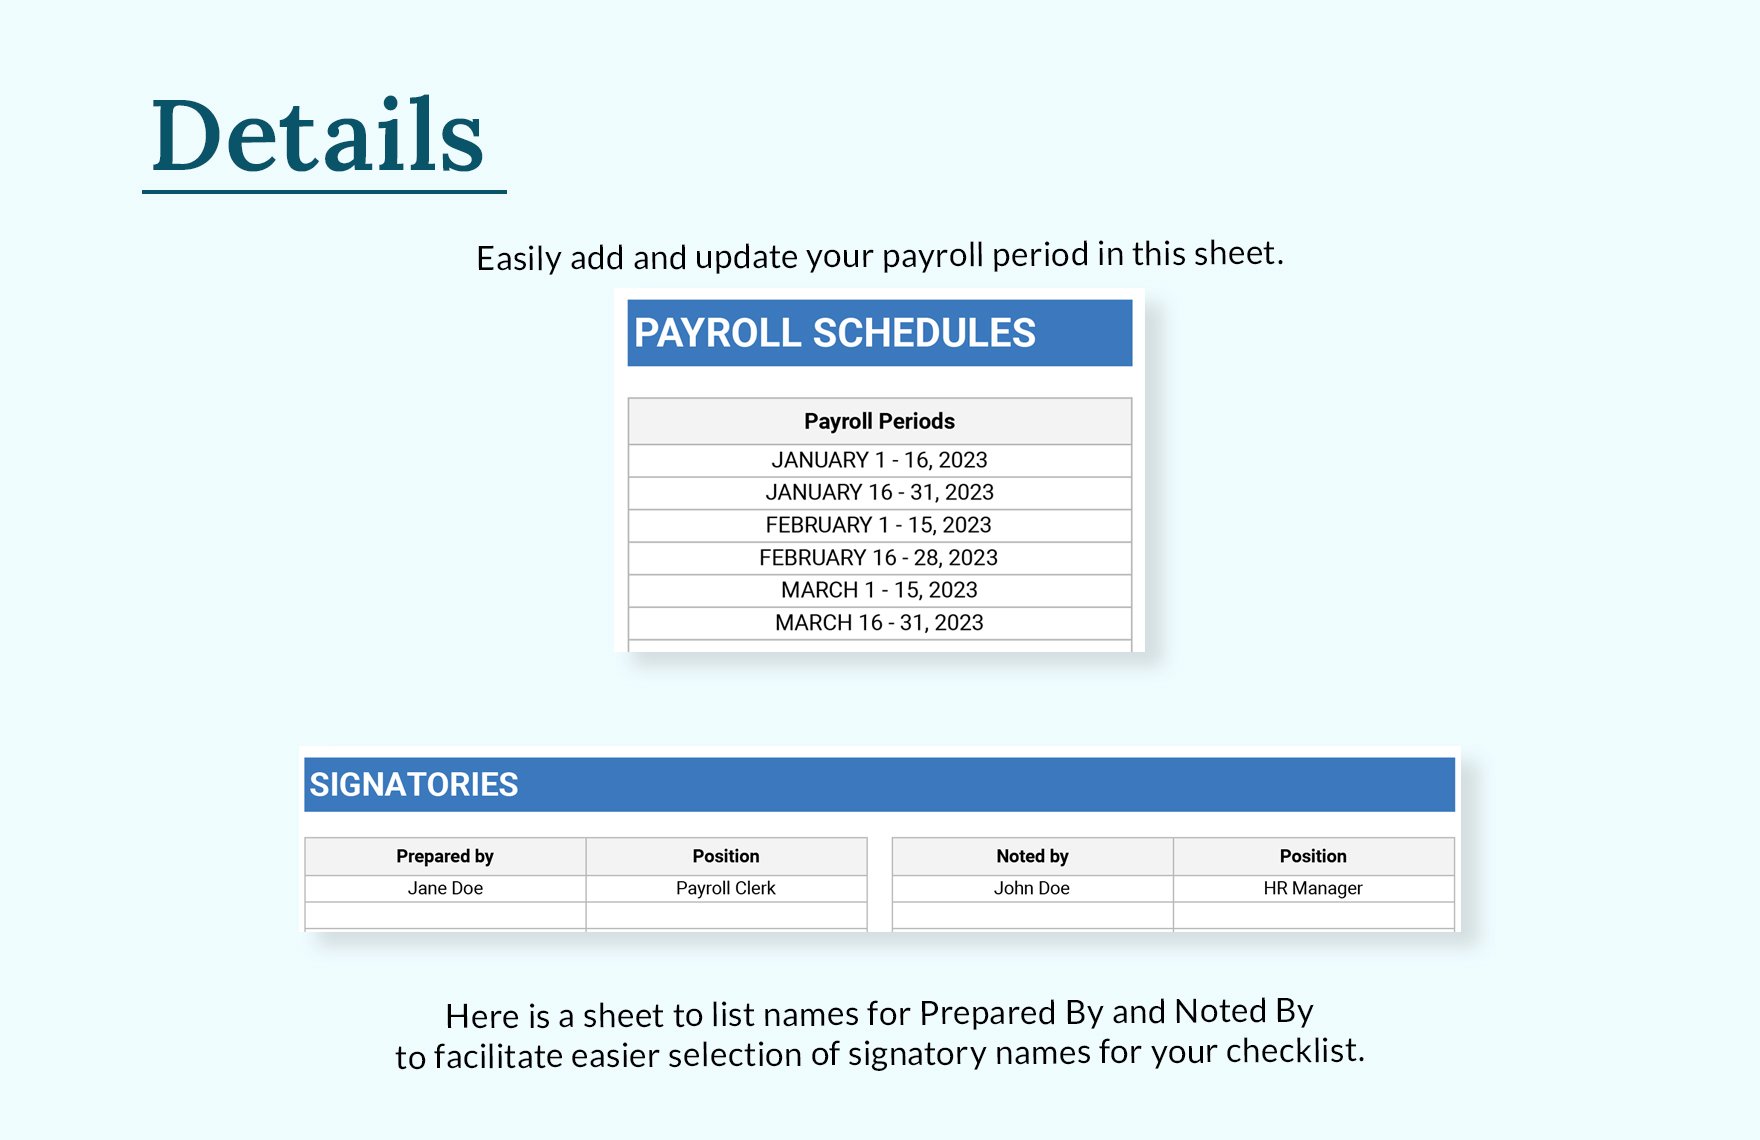 School Payroll Processing Checklist Template